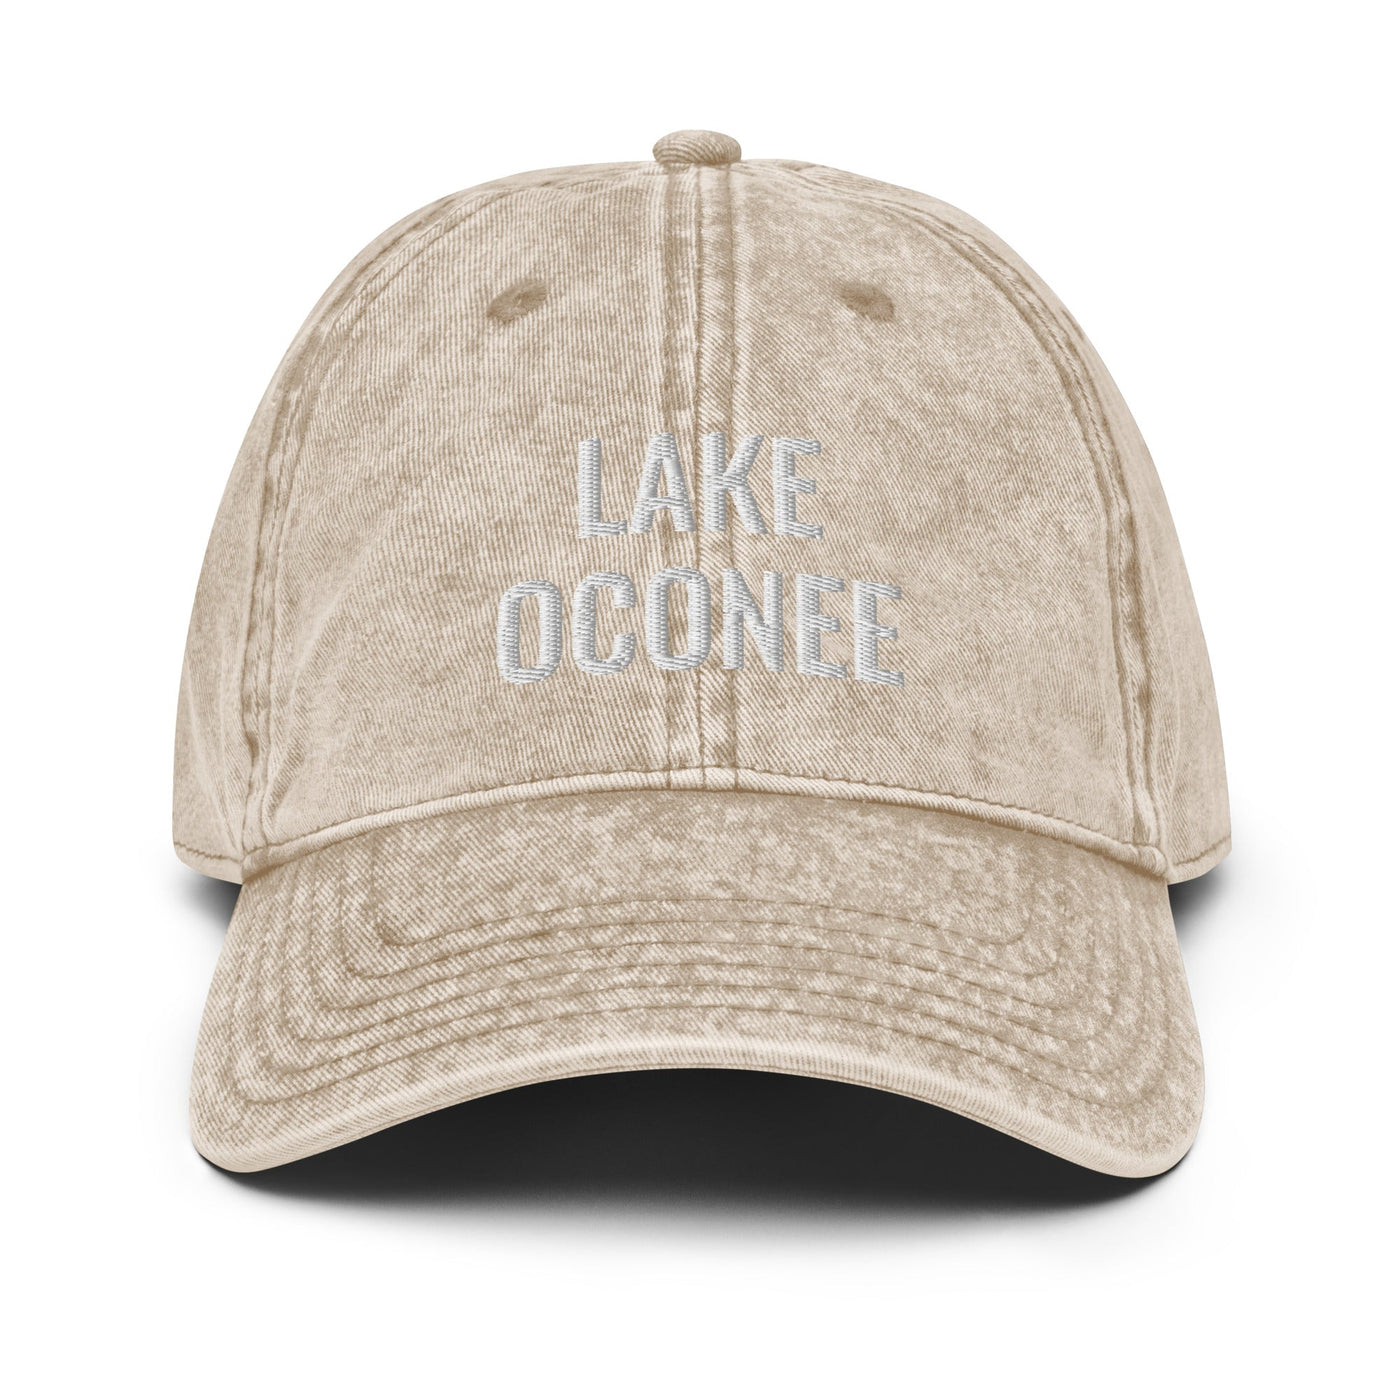 Lake Oconee Hat - Ezra's Clothing